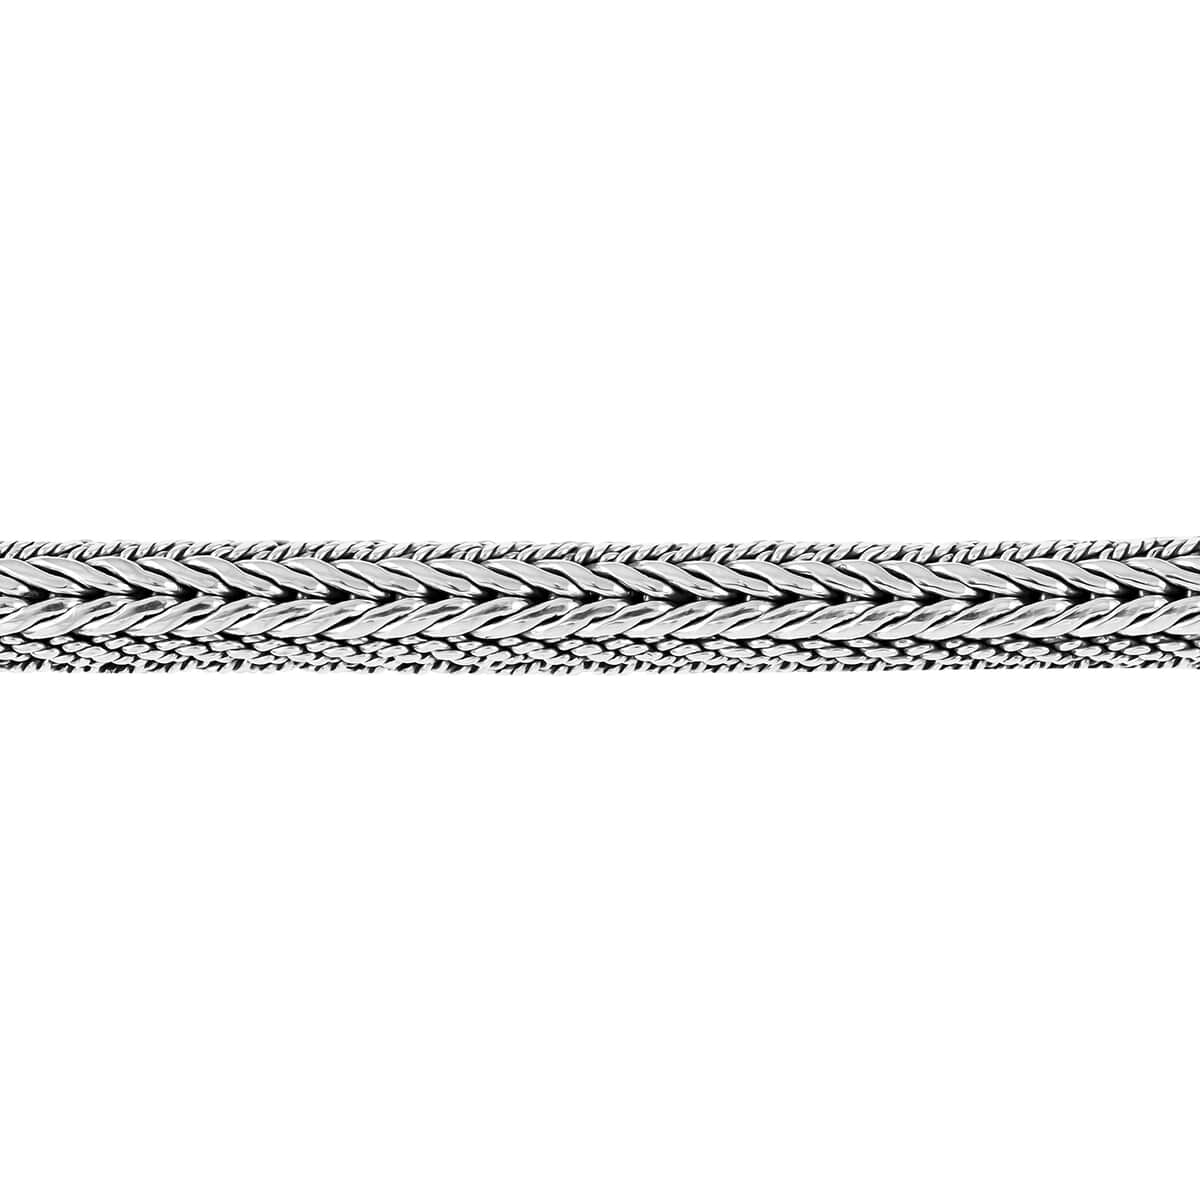 Bali Legacy Sterling Silver 8mm Tulang Naga Bracelet (7.50 In) 49.20 Grams image number 2